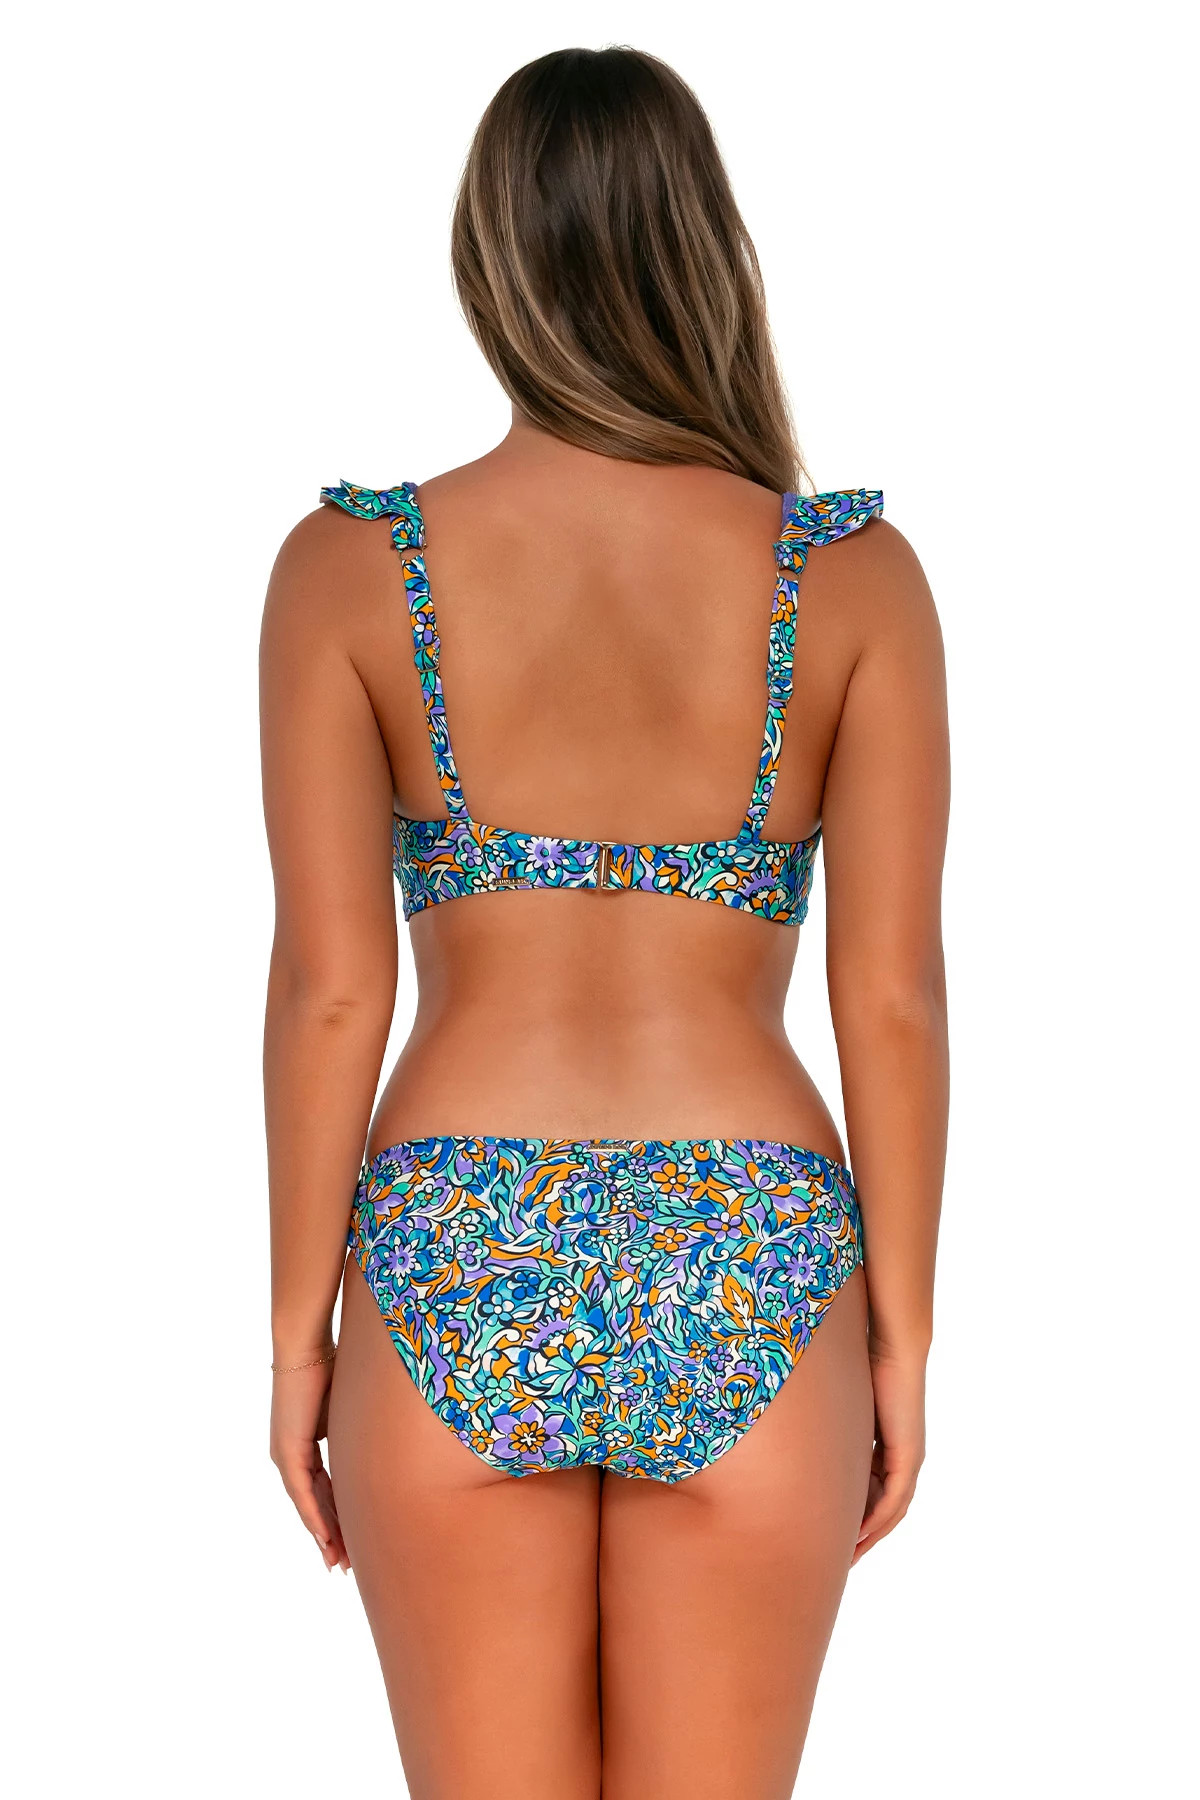 PANSY FIELDS Willa Wireless Bralette Bikini Top (E-H Cup) image number 2